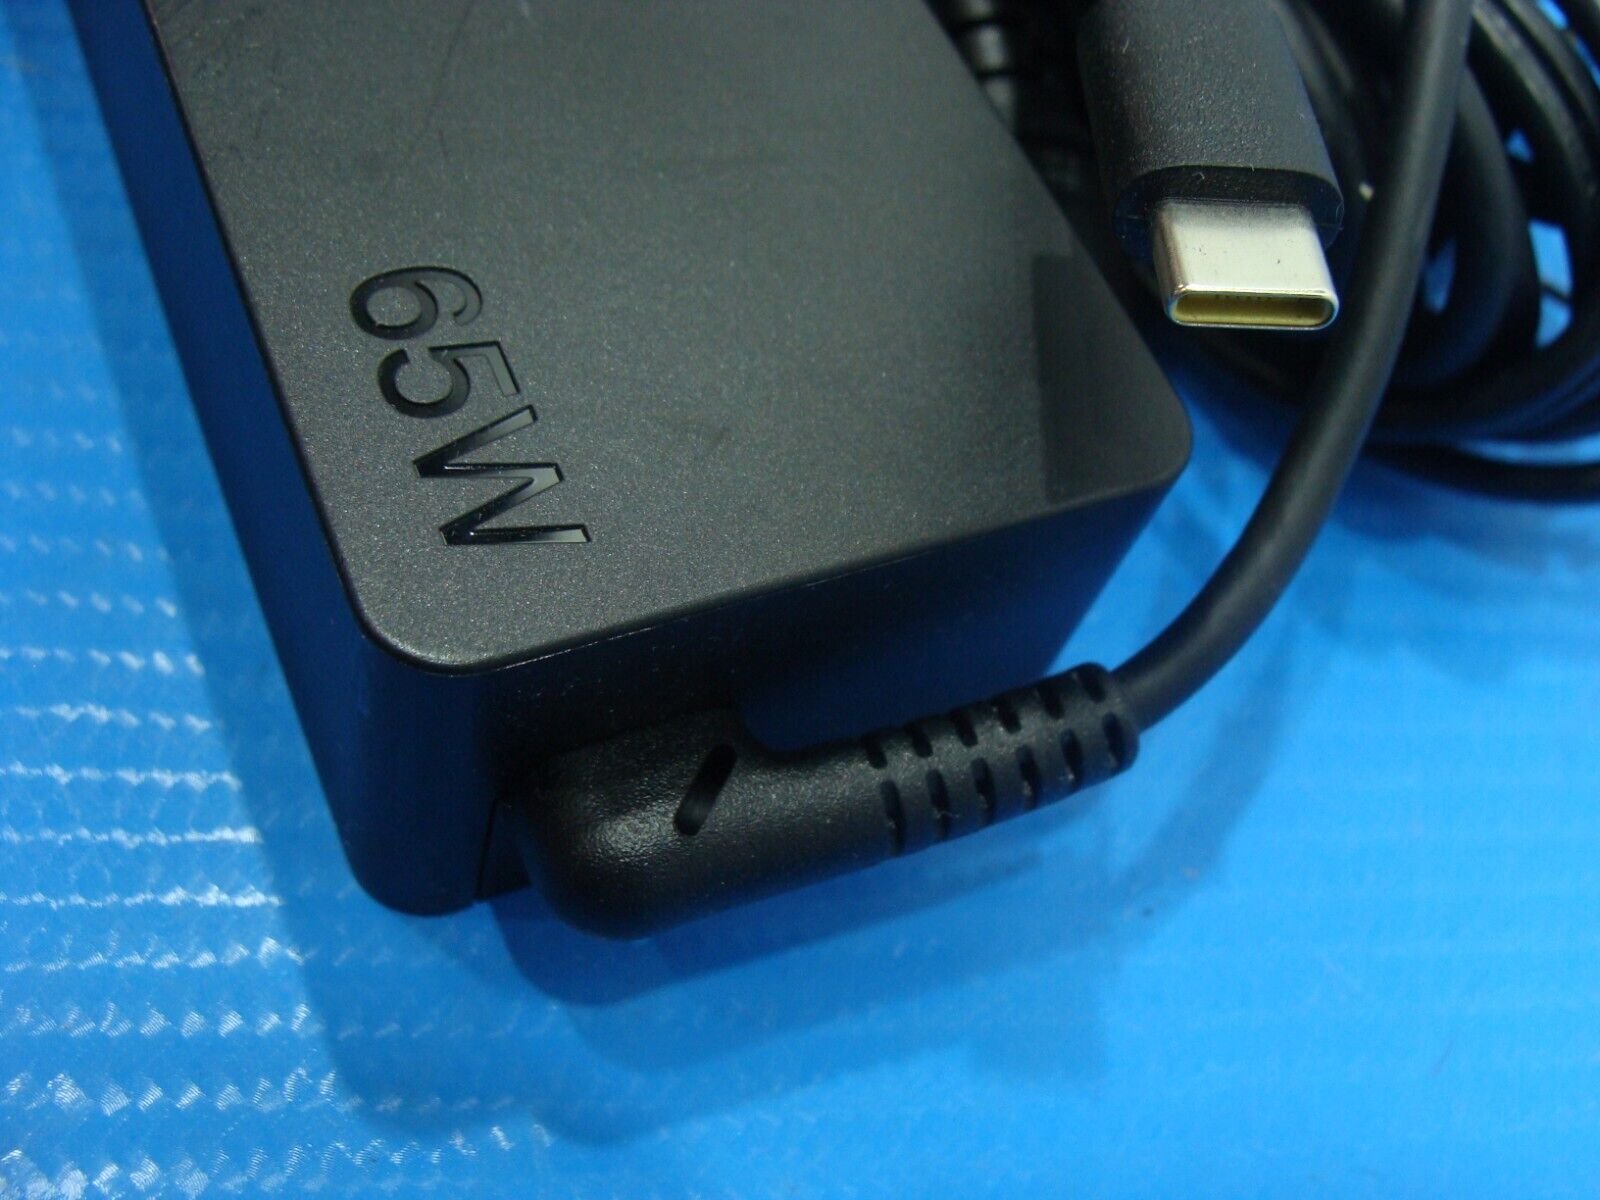 Charger Adapter Lenovo 65W 20V 3.25A USB-C Type-C Thinkpad X260 Yoga ADLX65YCC2A